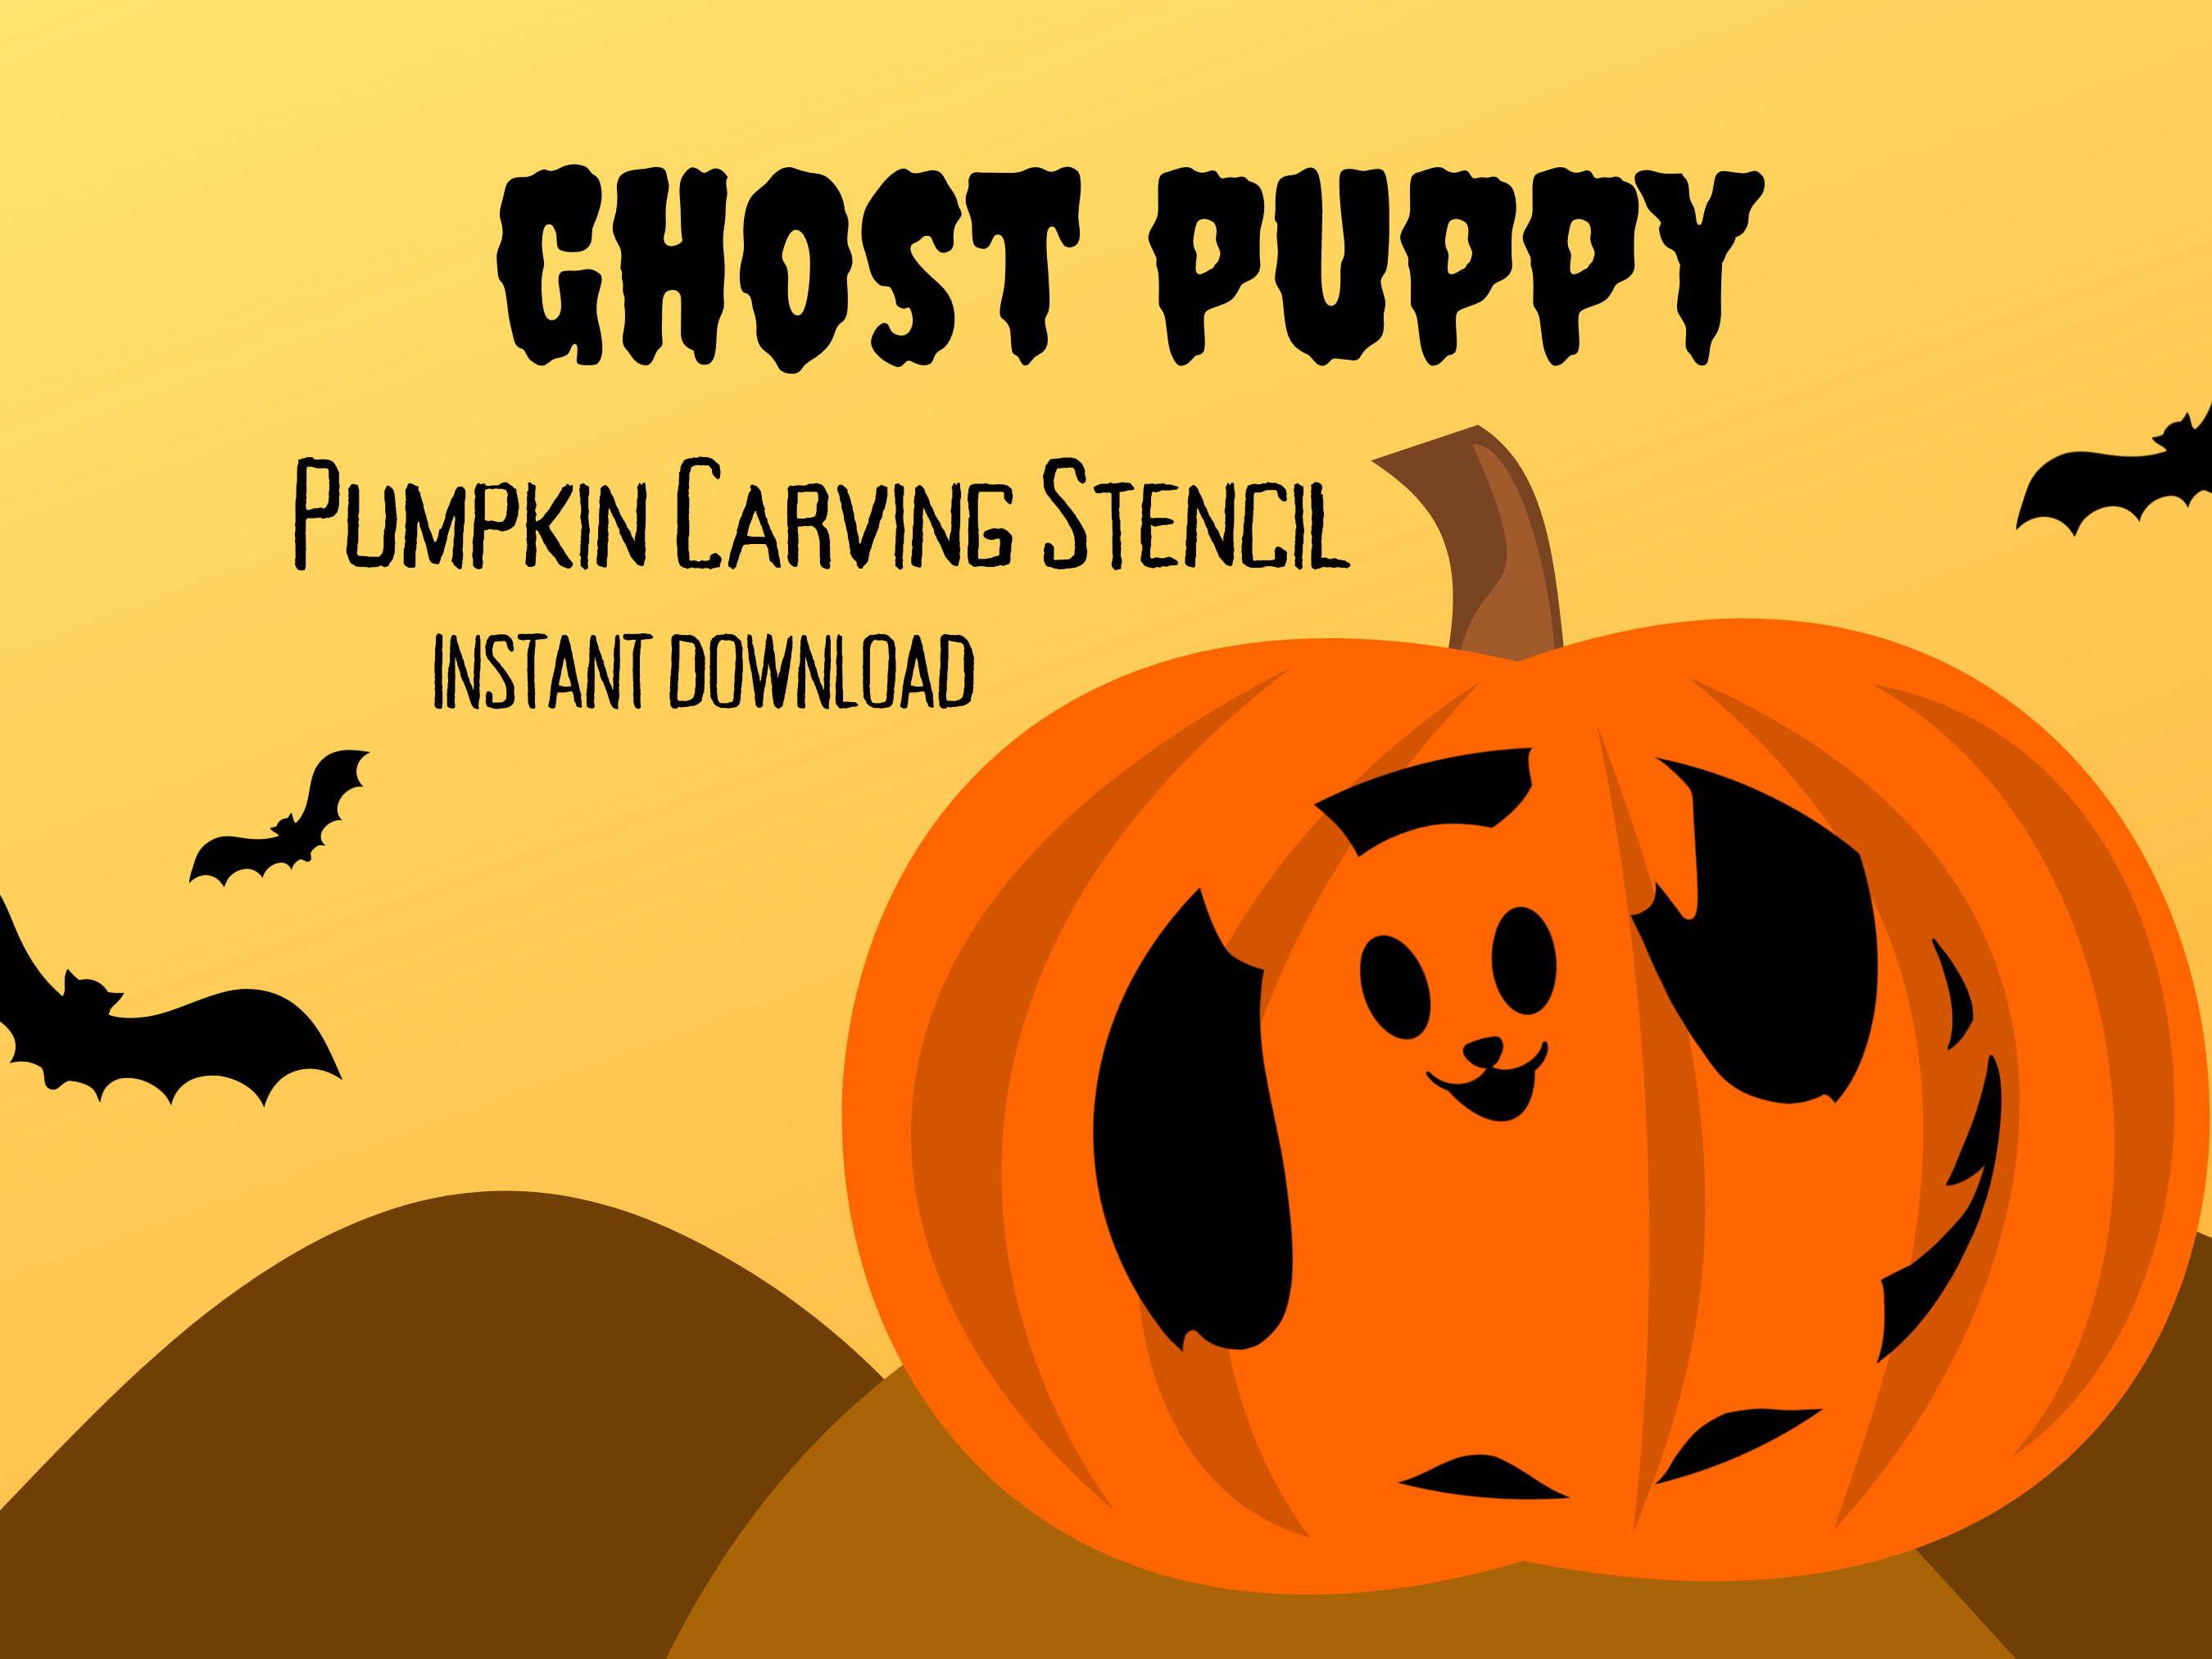 Ghost puppy pumpkin carving stencil kawaii halloween jack olantern carving pattern